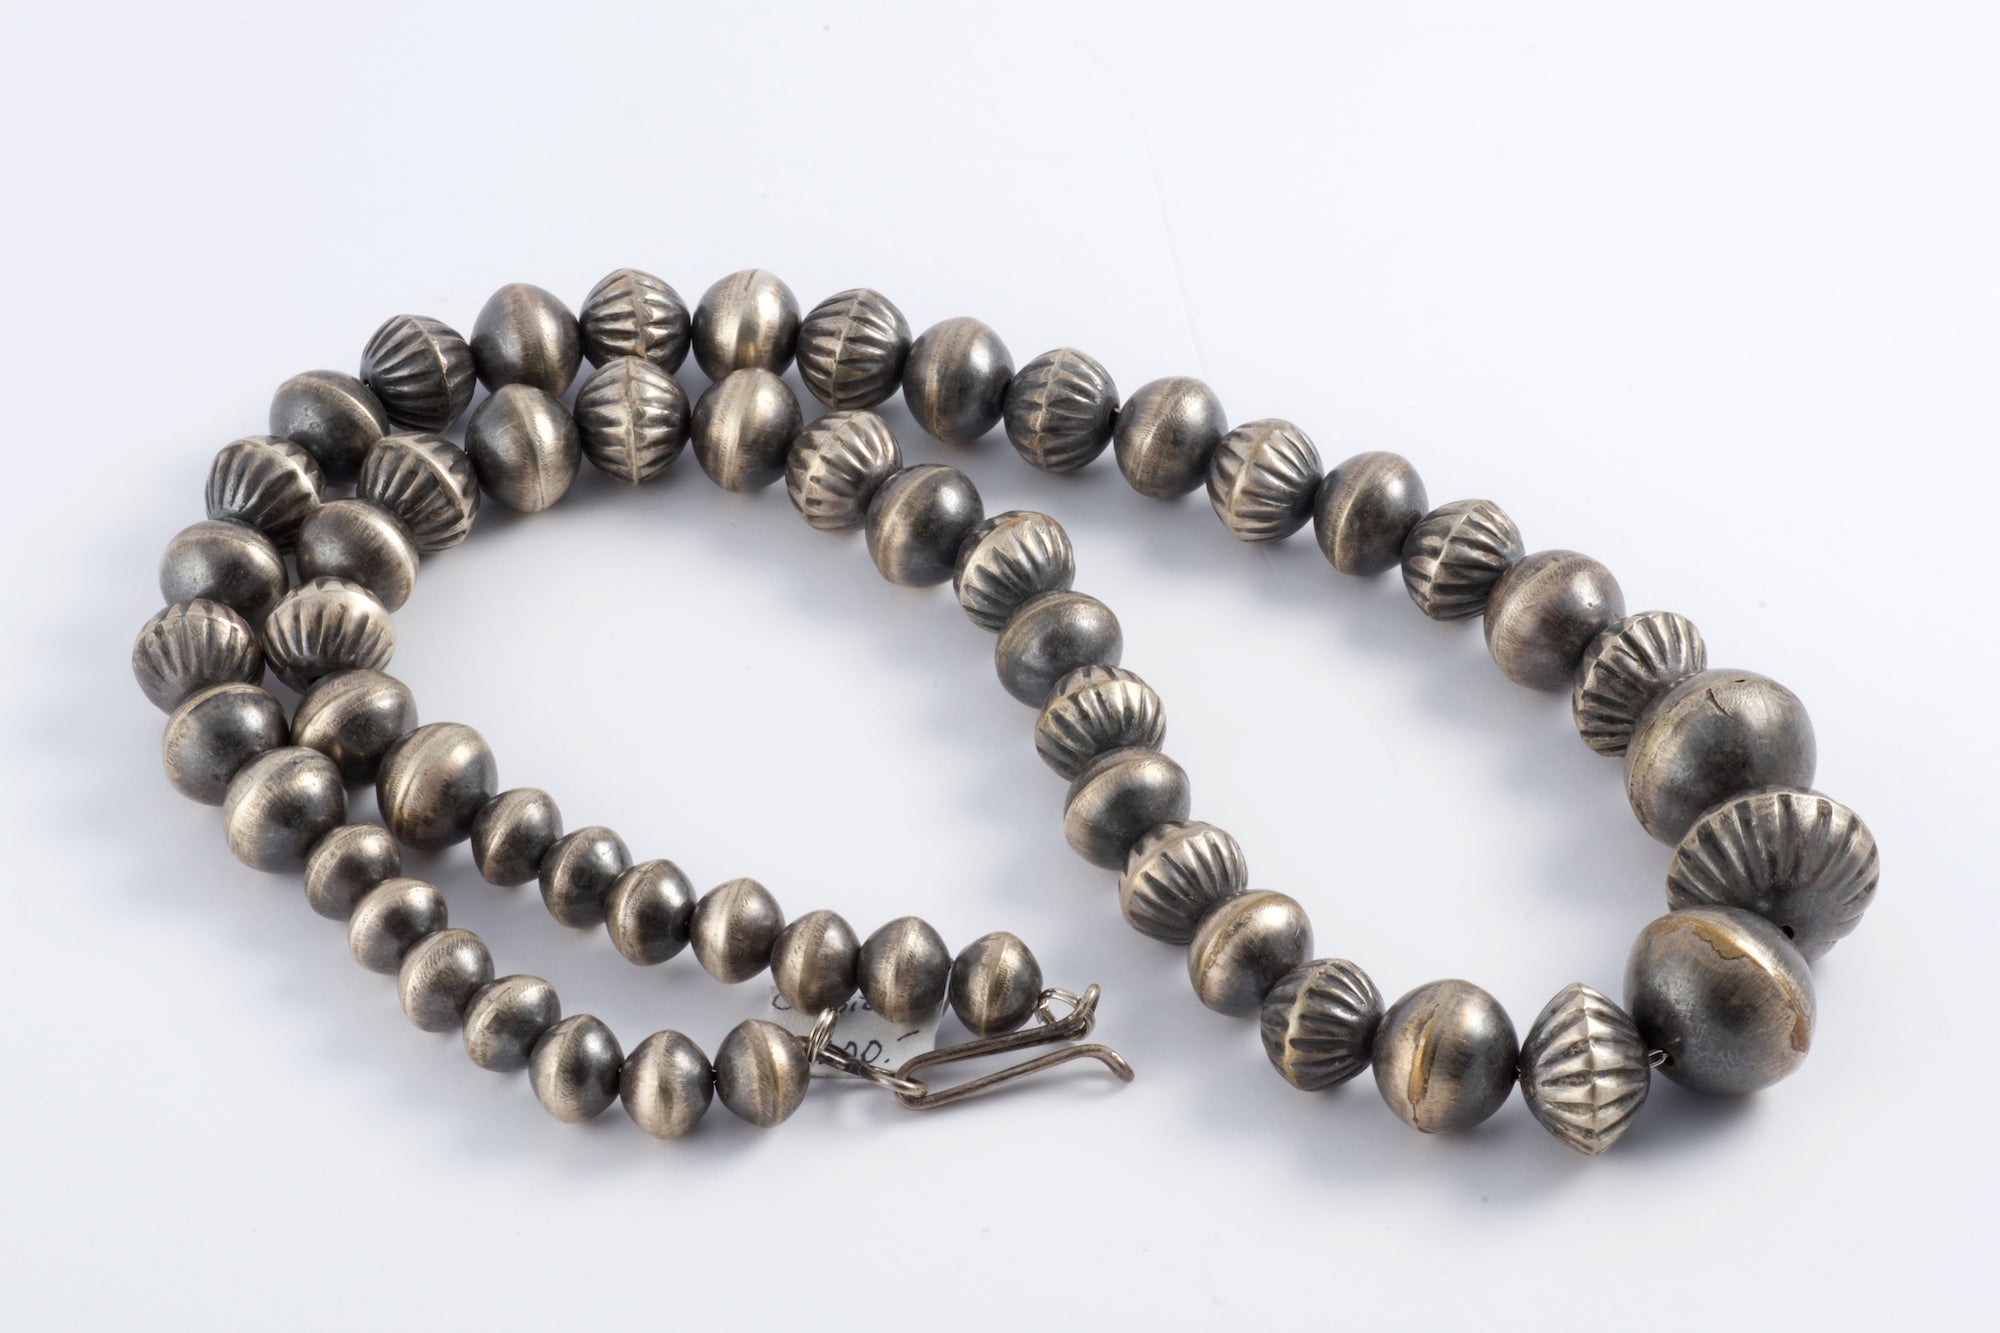 Handmade Bead Necklace and Earring Set By Virginia Tso